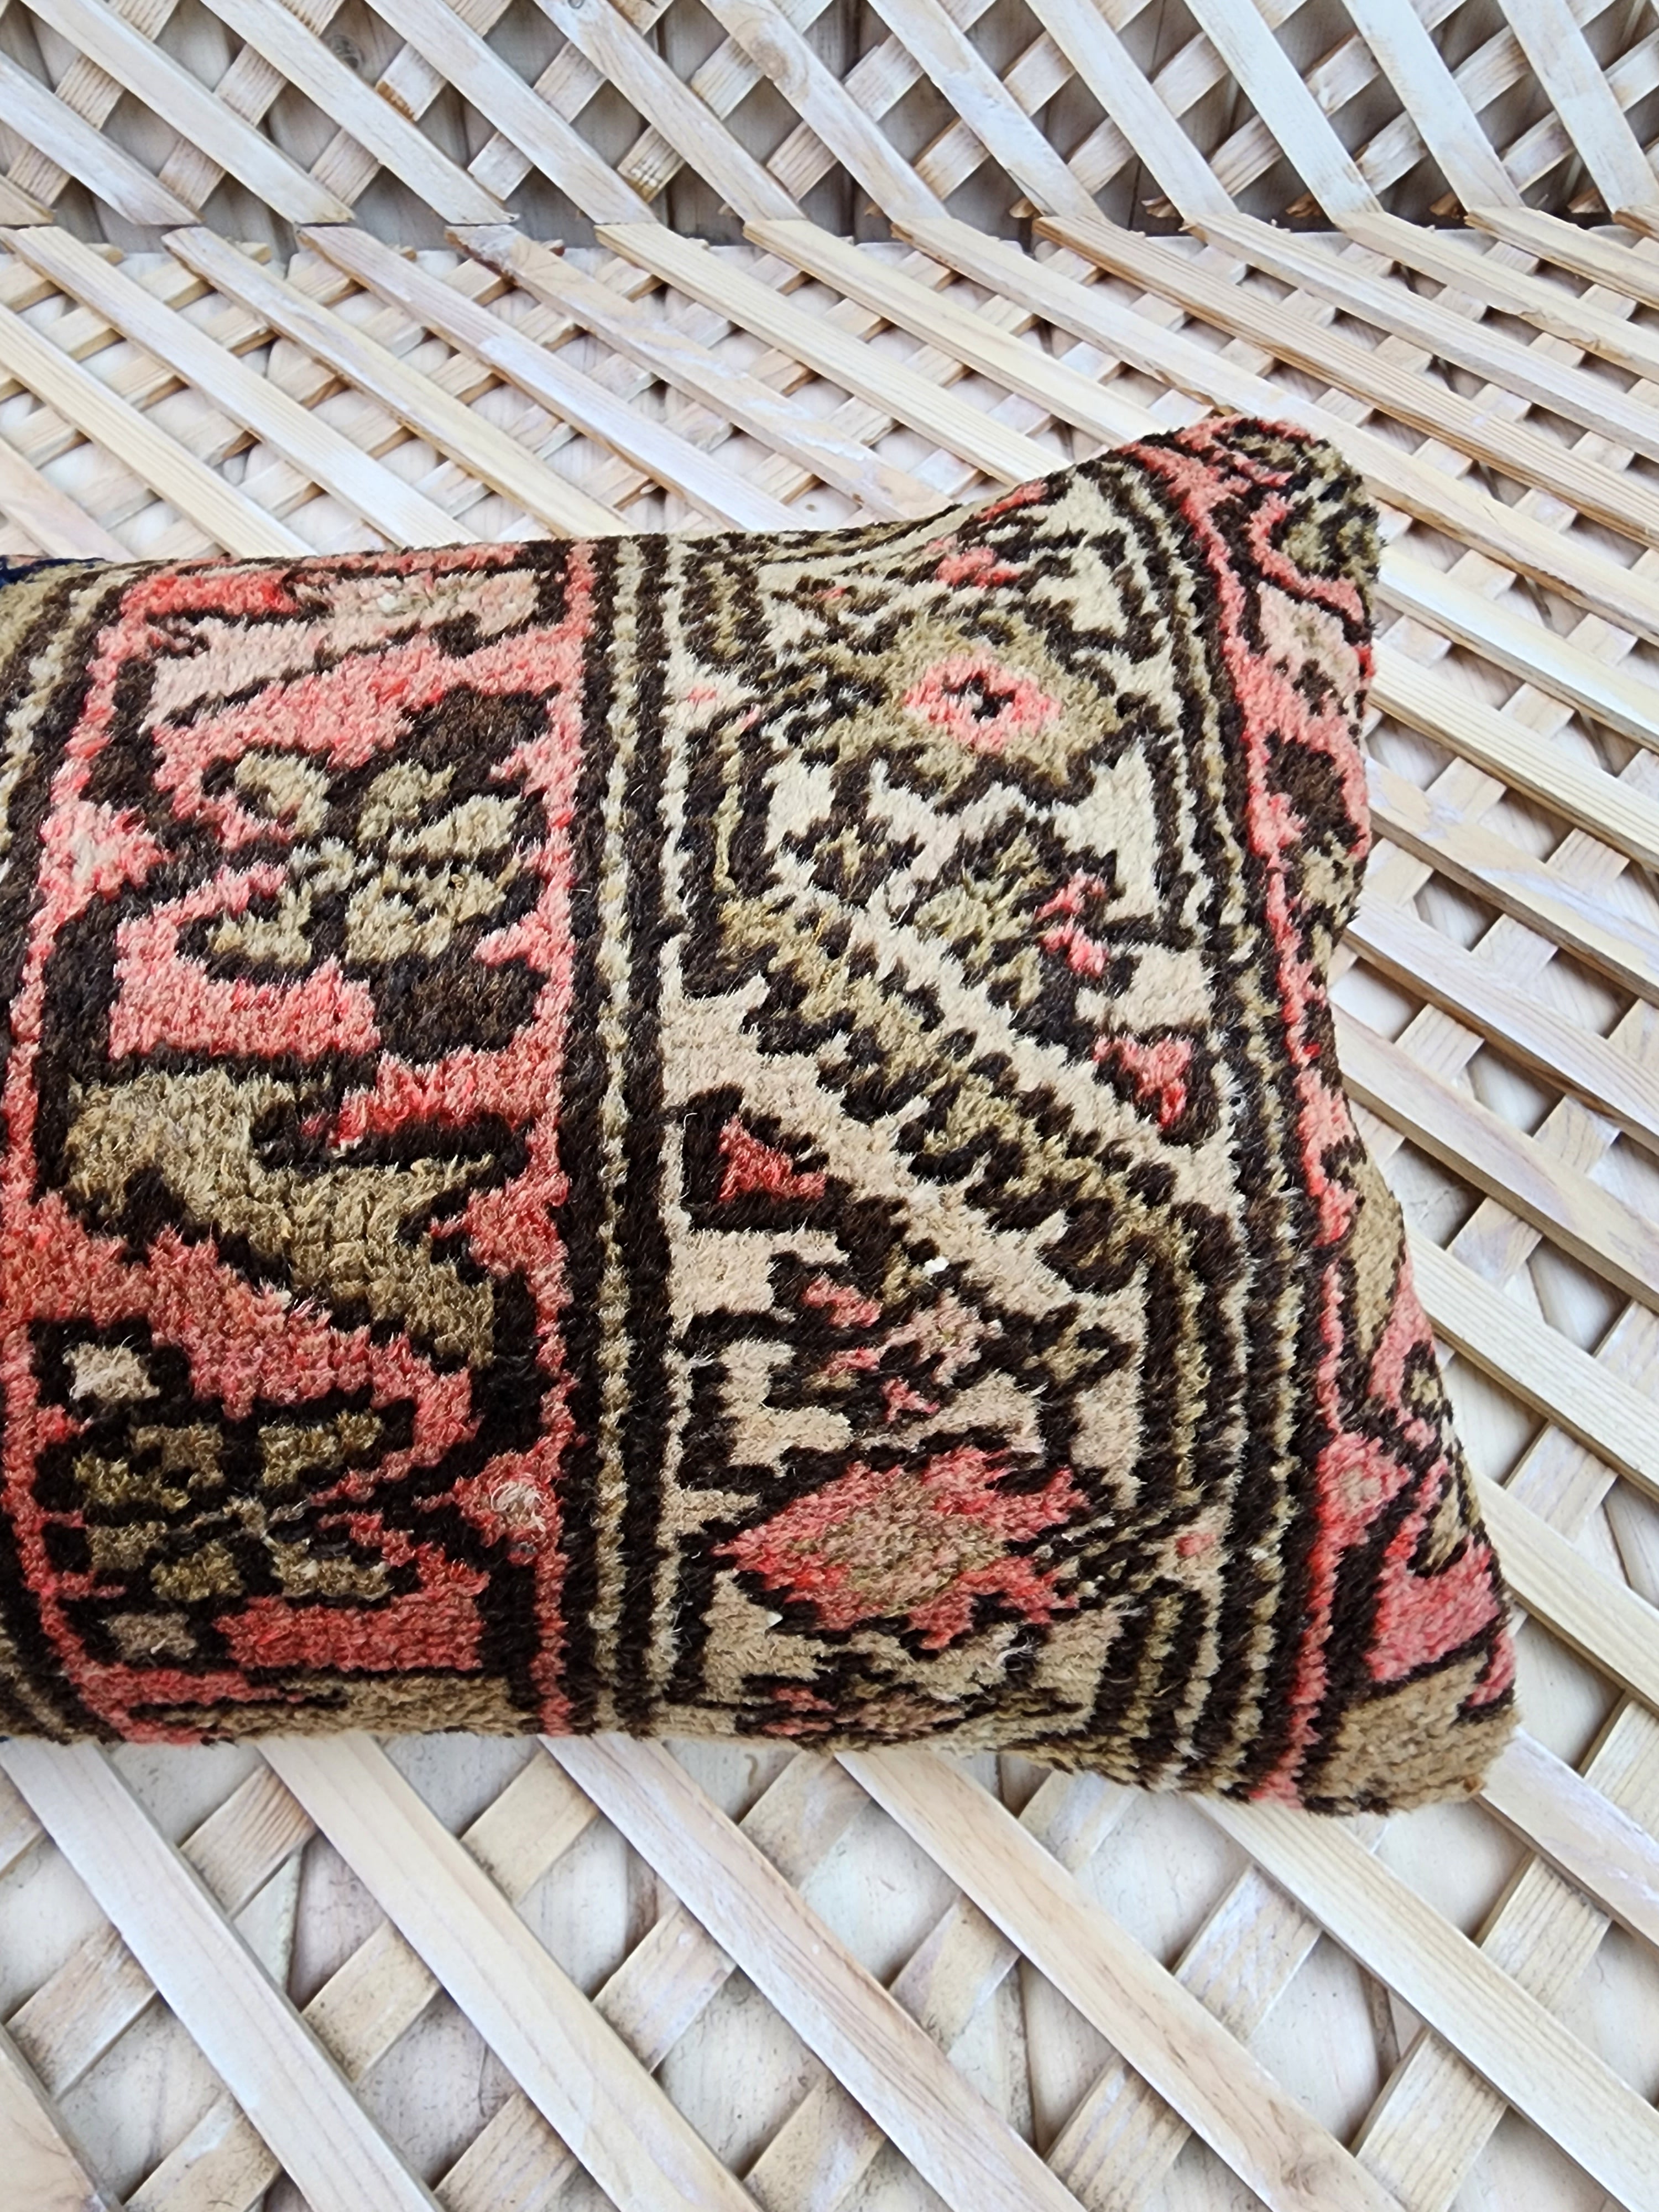 Antique Persian Carpet Pillow Cover 12x20 inch